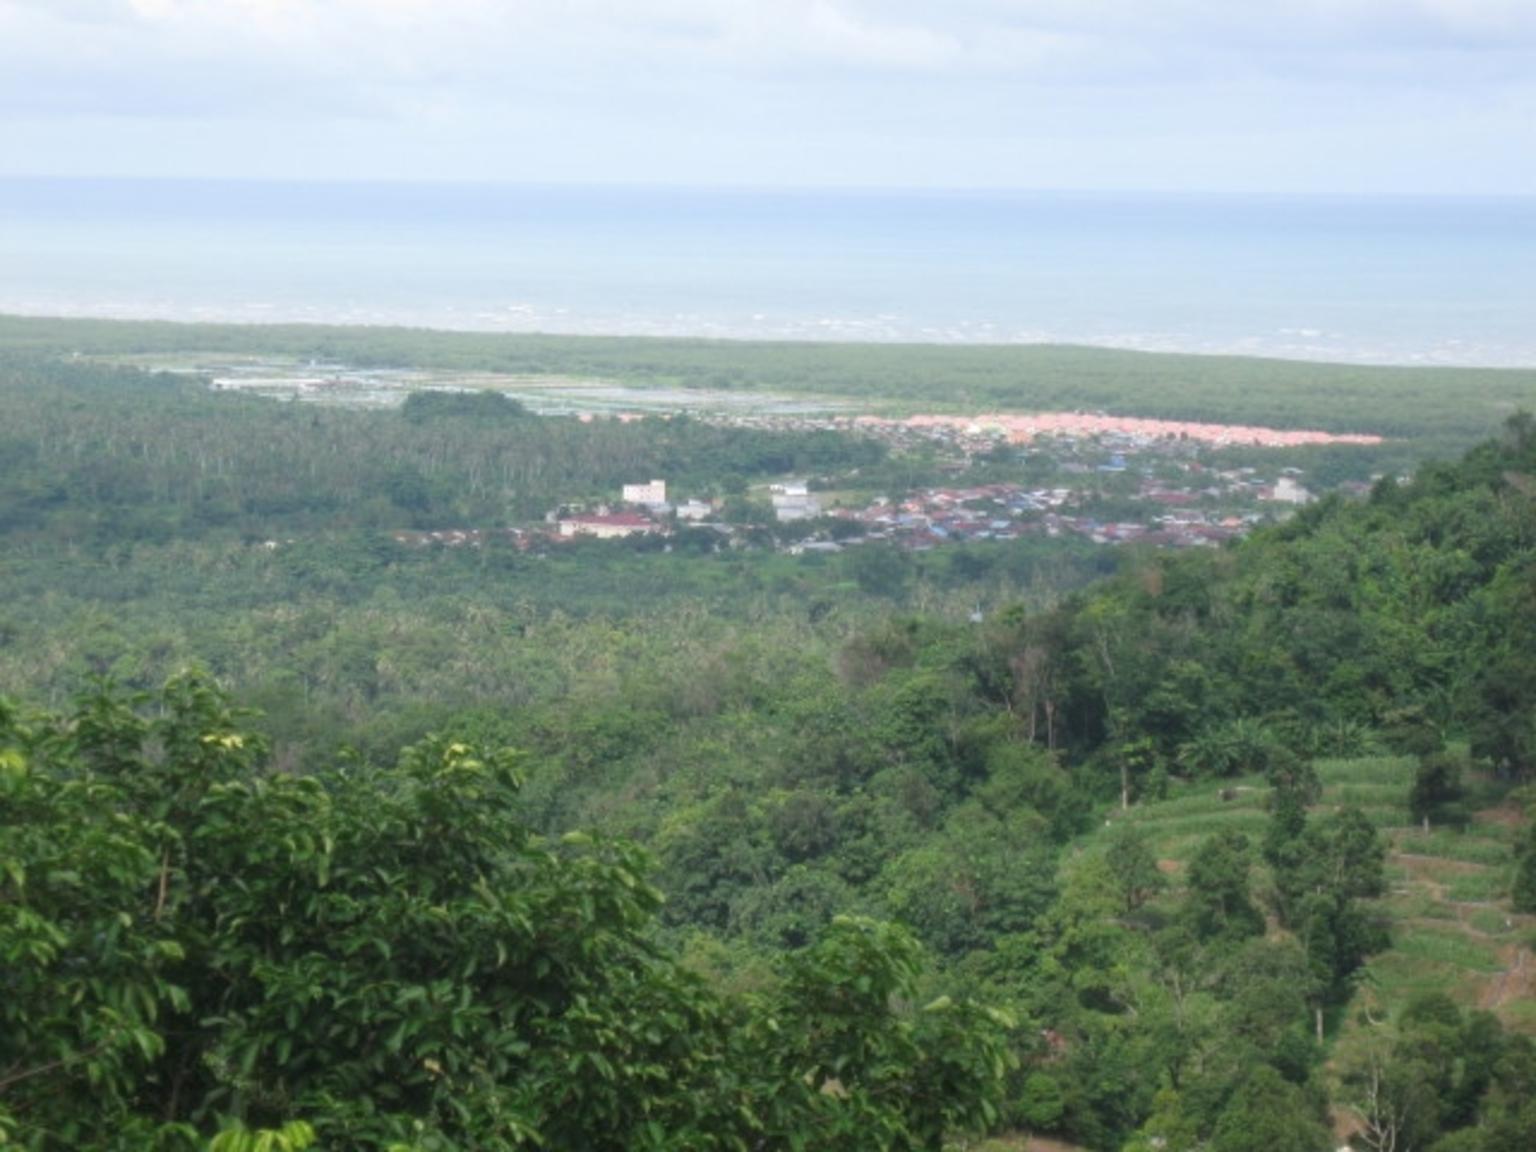 Coastal View